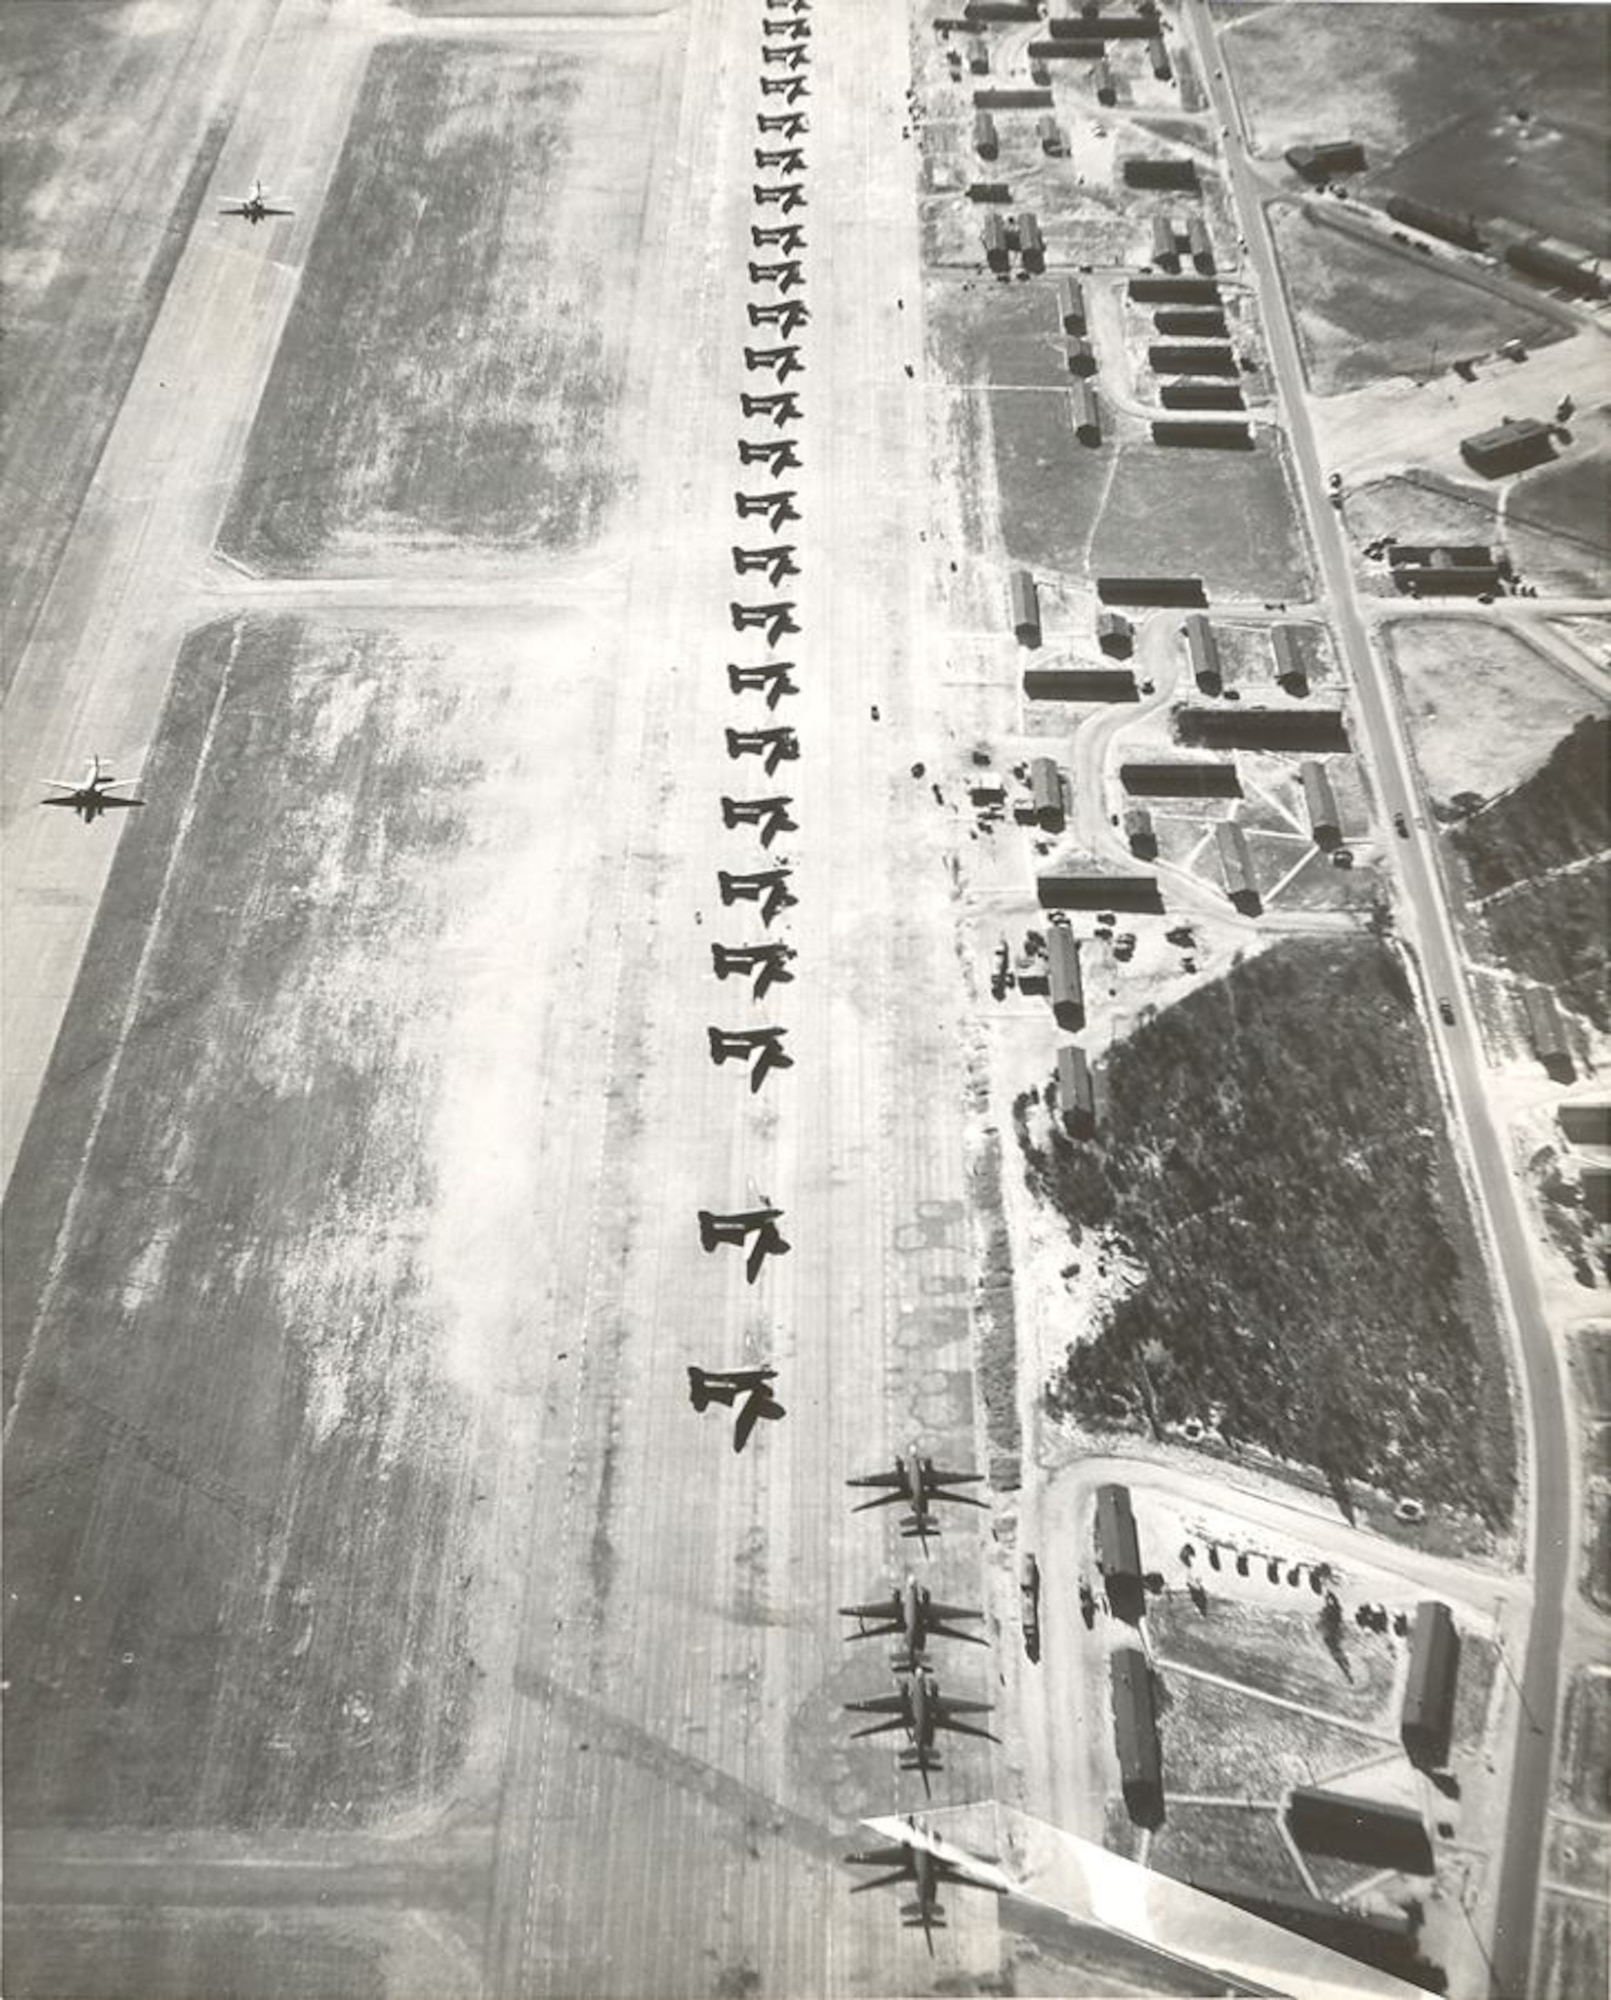 Sedalia Army Air Field